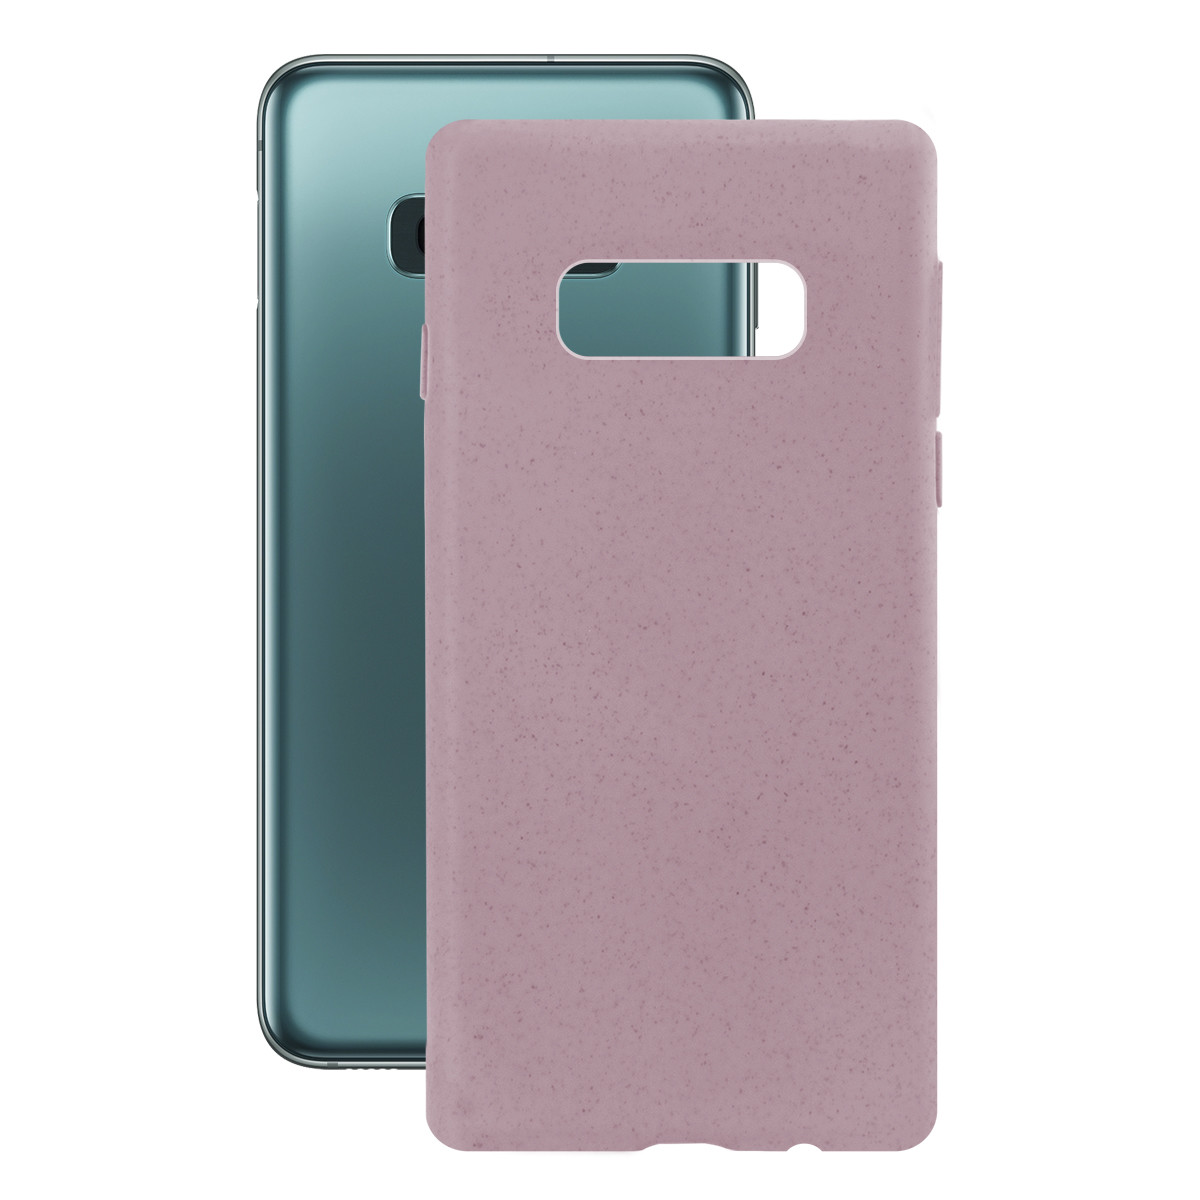 Husa Cover Soft Ksix Eco-Friendly pentru Samsung Galaxy S10e Roz thumb